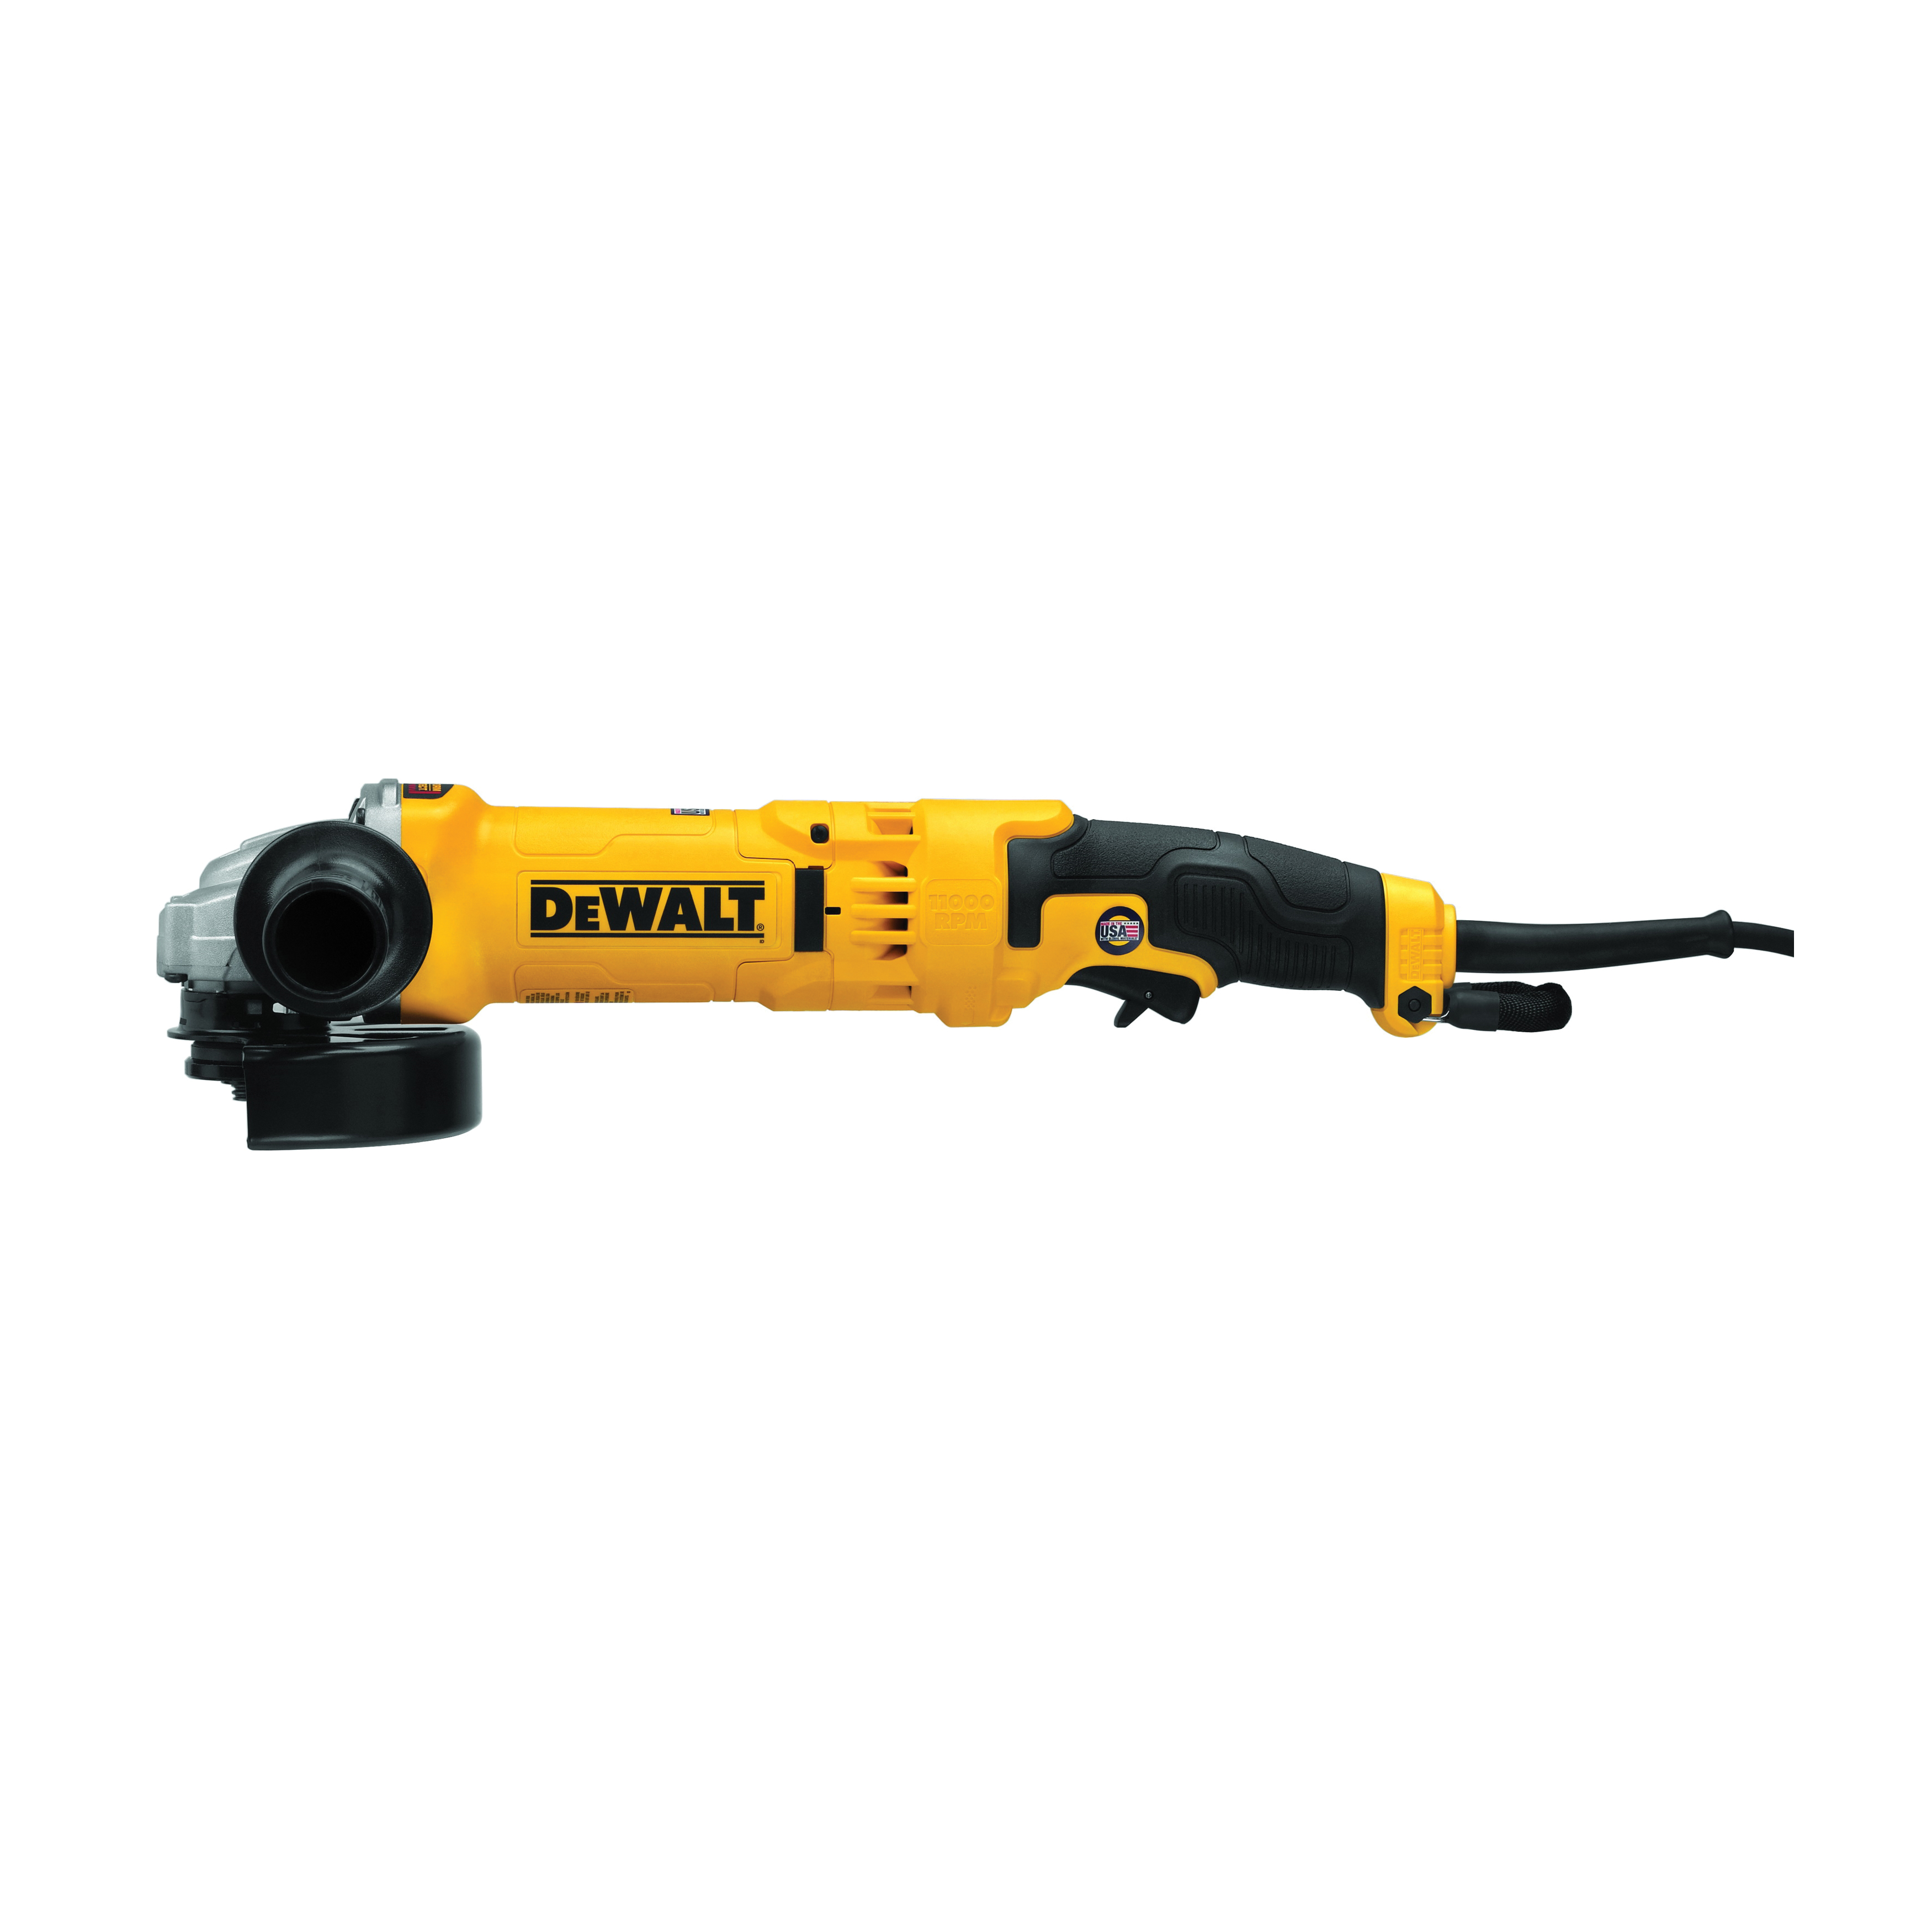 DeWALT® DWE43115N High Performance Electric Angle Grinder, 4-1/2 to 5 in Dia Wheel, 5/8-11 Arbor/Shank, 120 VAC, Yes, Trigger Switch